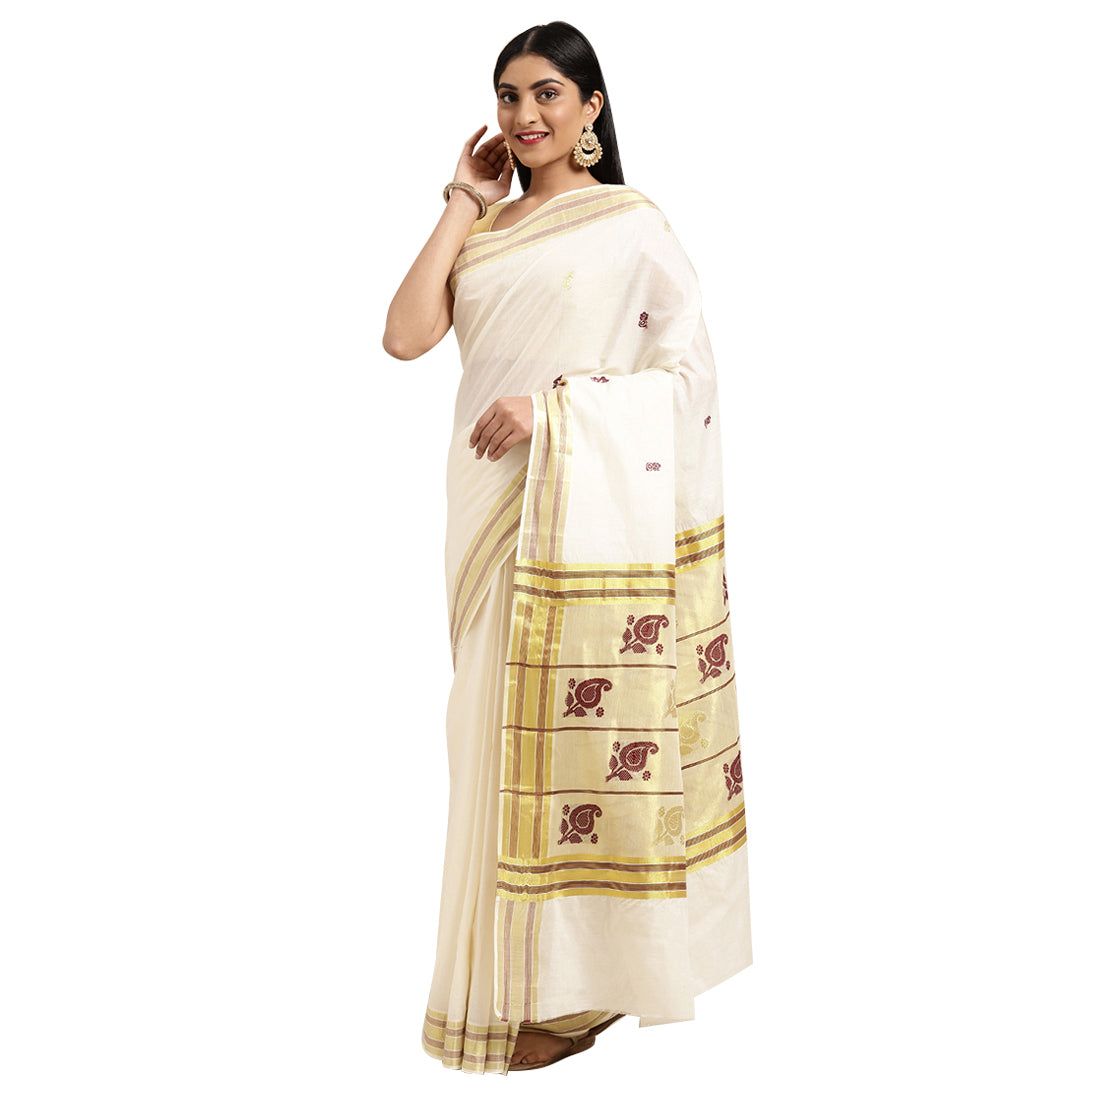 Graceful Drapes: Embracing Tradition with Kerala Cotton Sarees